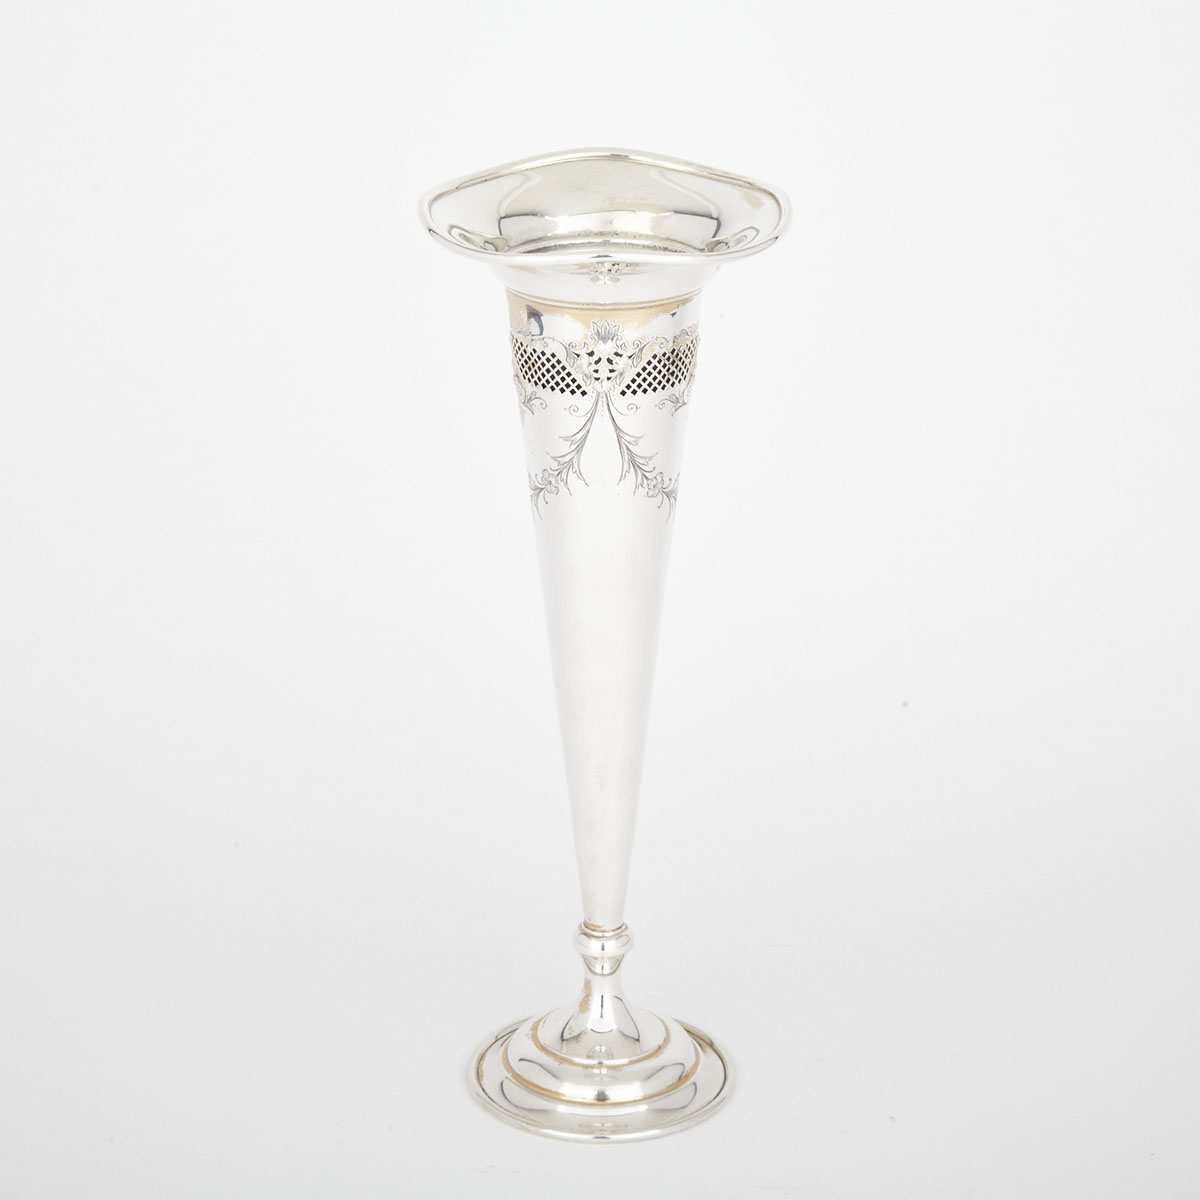 American Silver Vase, George Henckel & Co., New York, N.Y., early 20th century